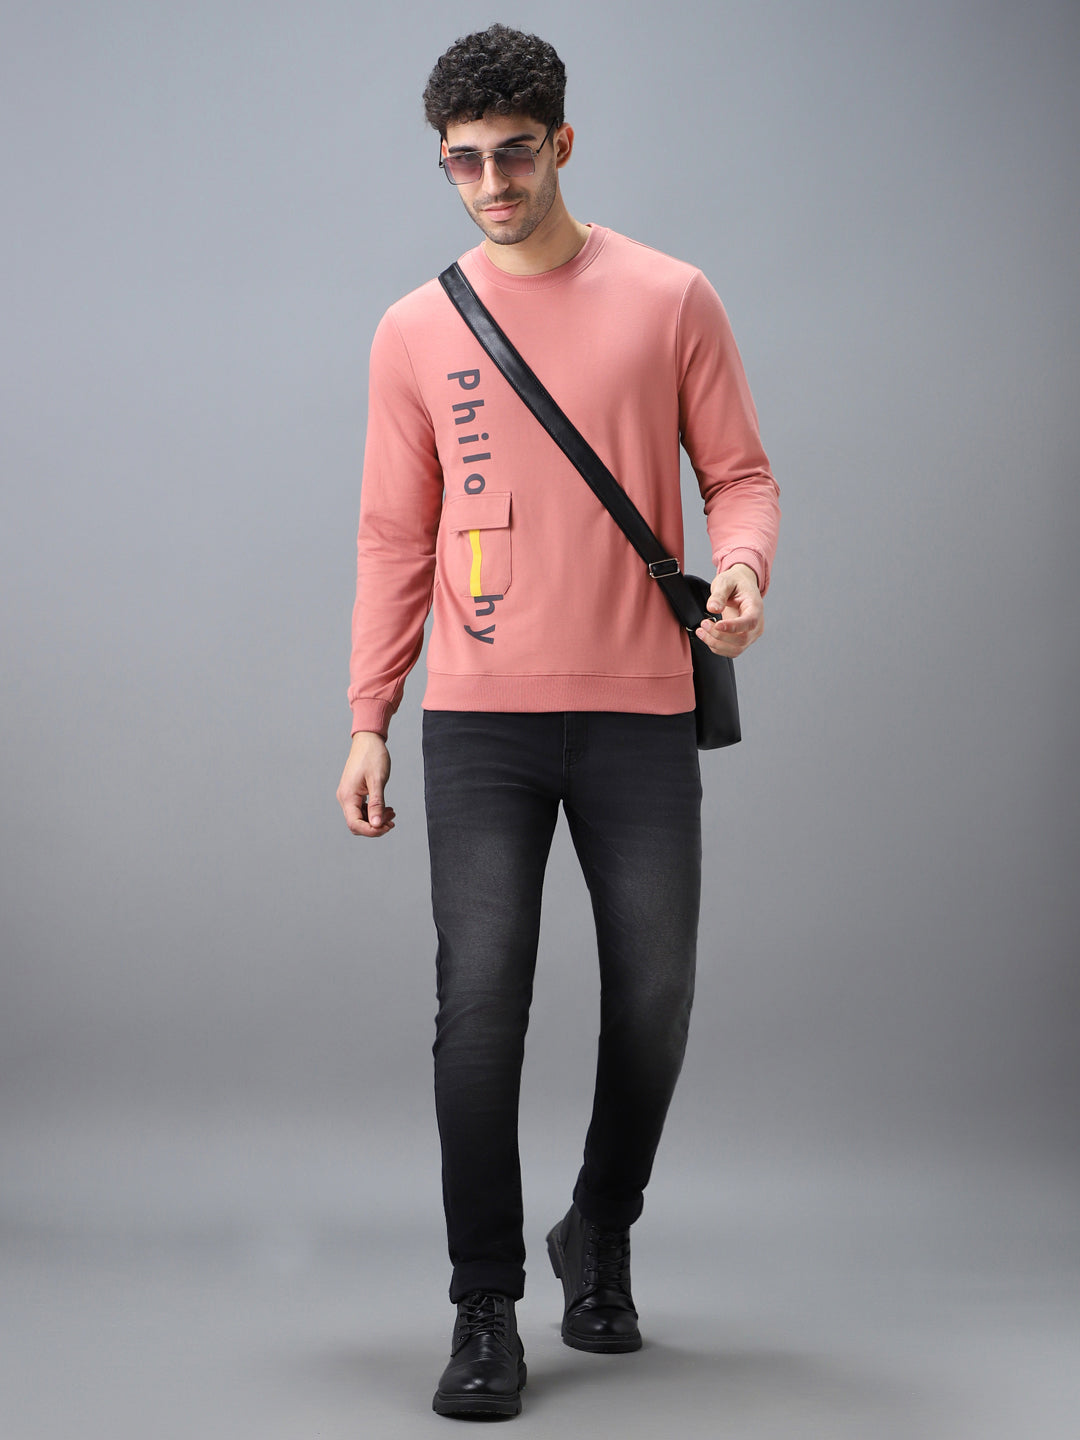 Urbano Fashion Men's Pink Cotton Graphic Print Round Neck Sweatshirt